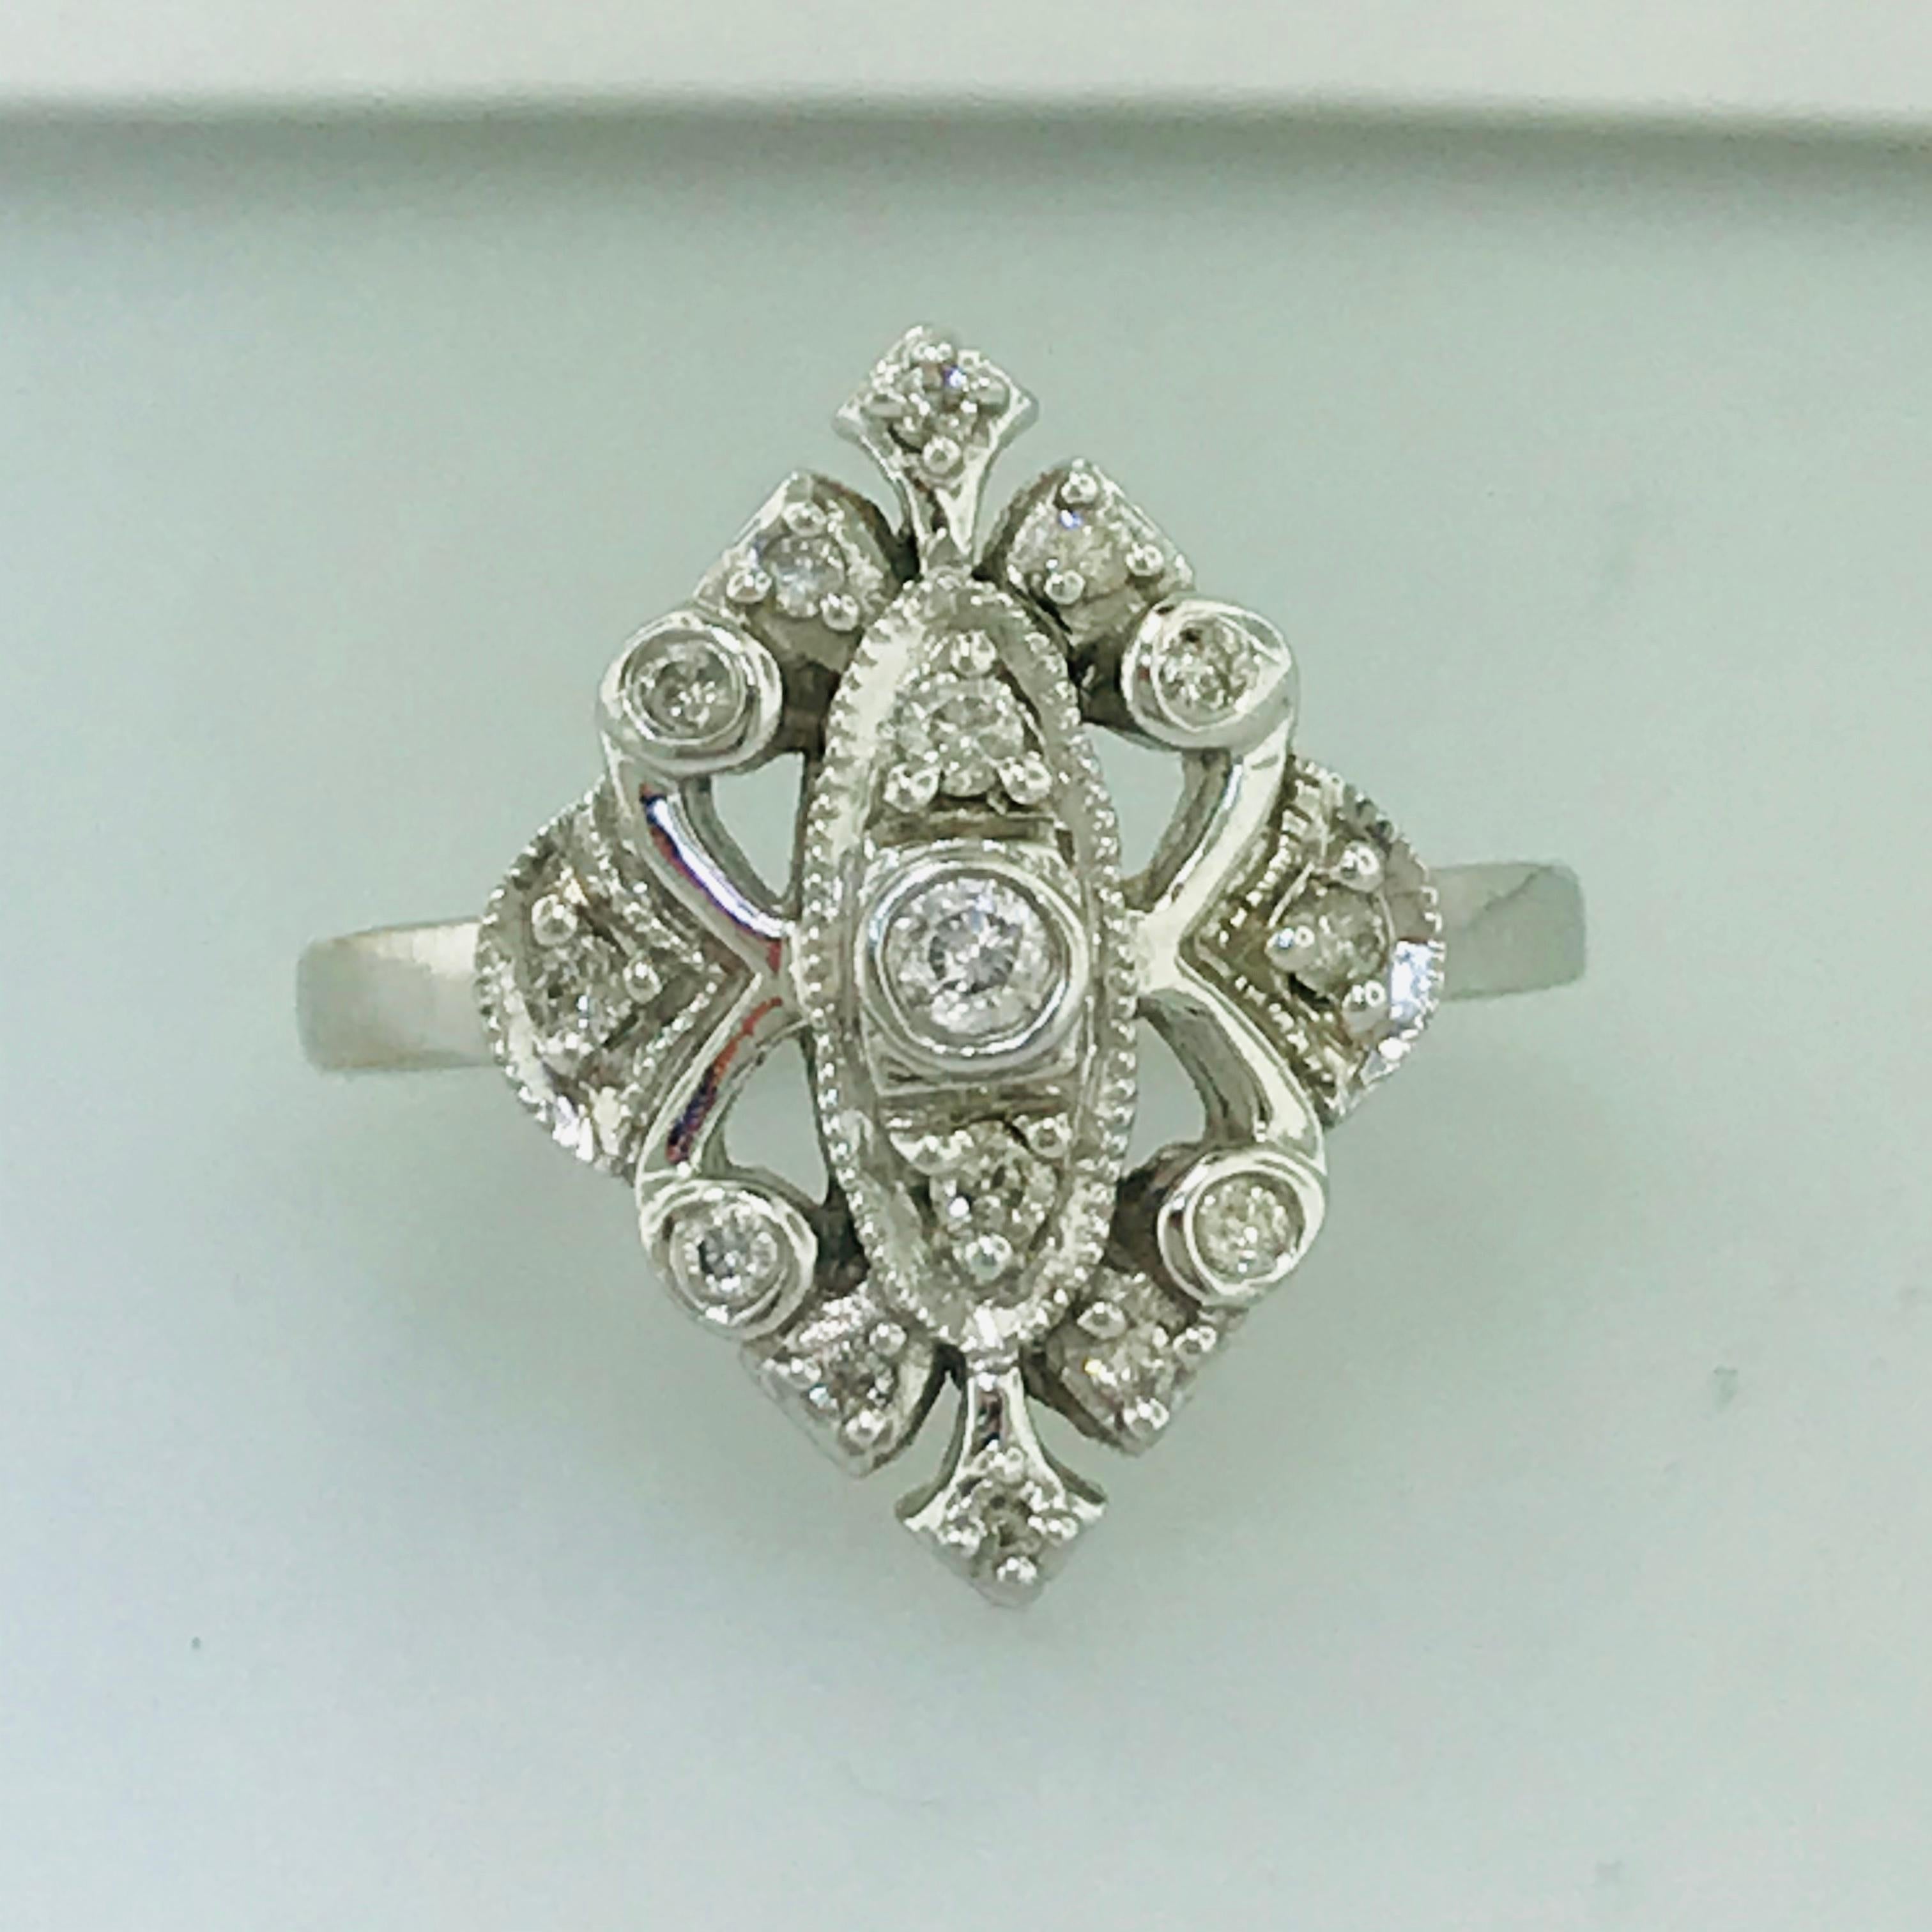 Round Cut Estate Engagement Ring w Diamonds .20 Carat Total Diamond Weight Vintage Design